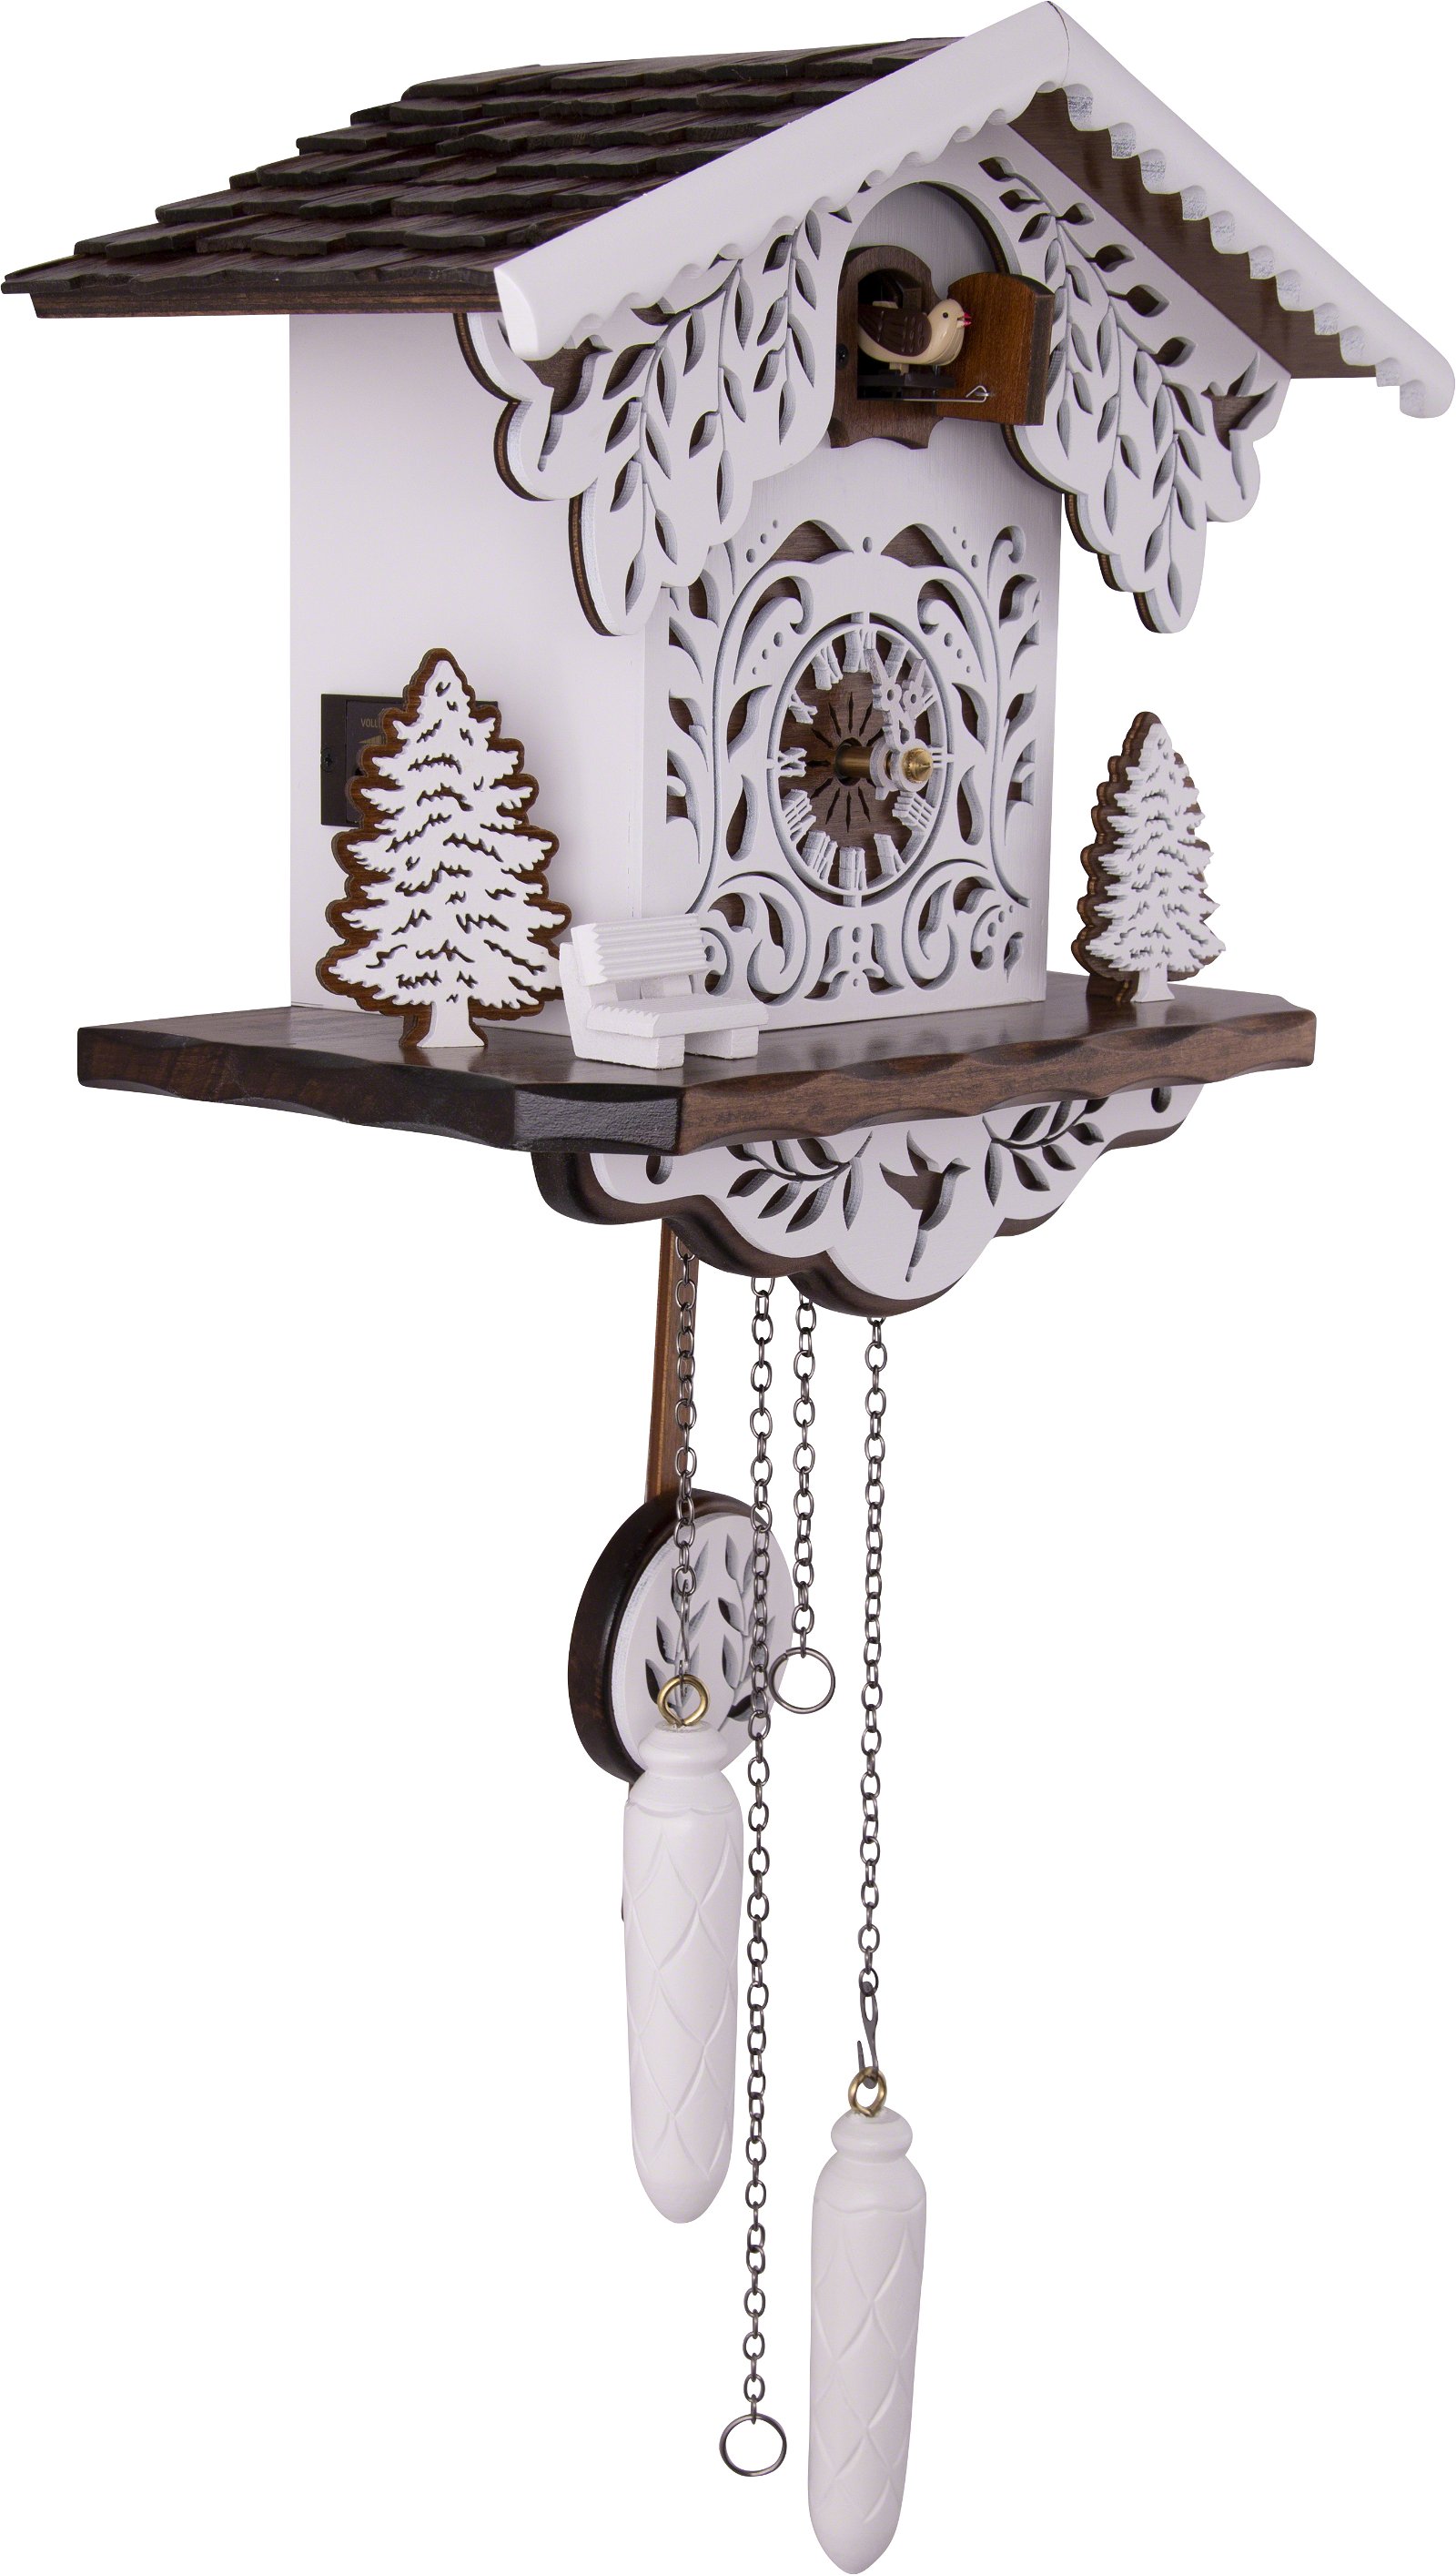 Cuckoo Clock Quartz-movement Chalet-Style 26cm by Engstler